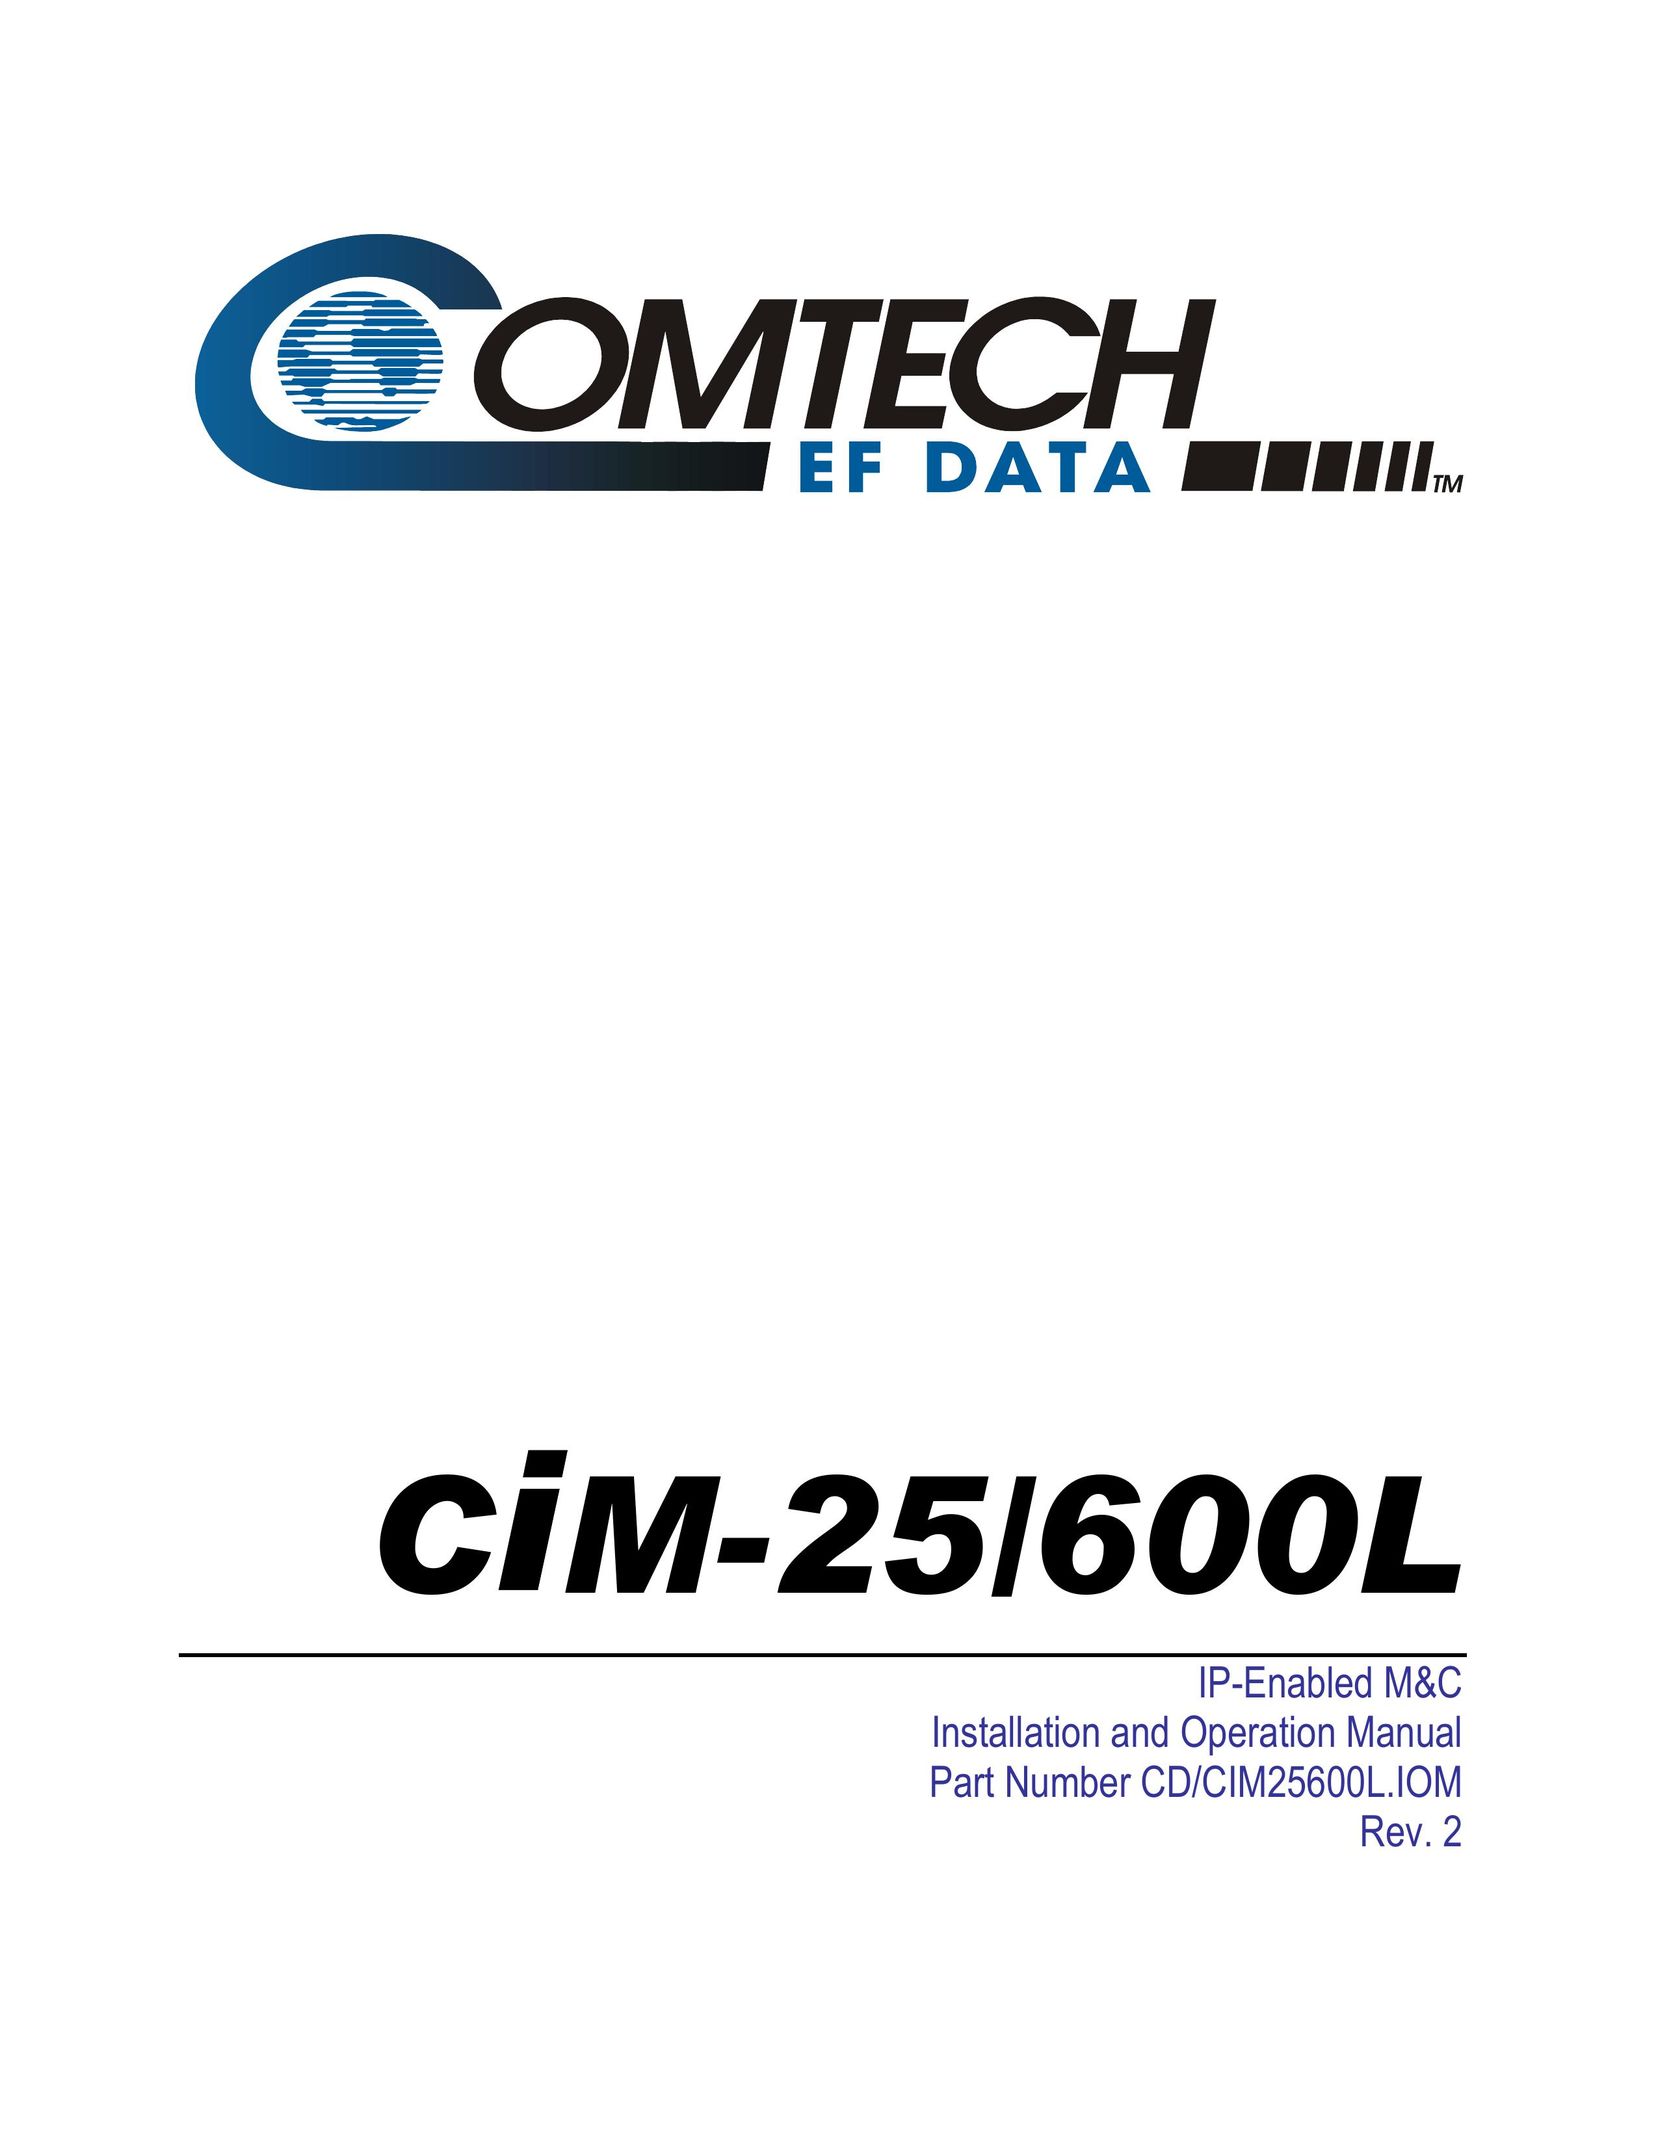 Mocomtech CiM-25/600L Network Hardware User Manual